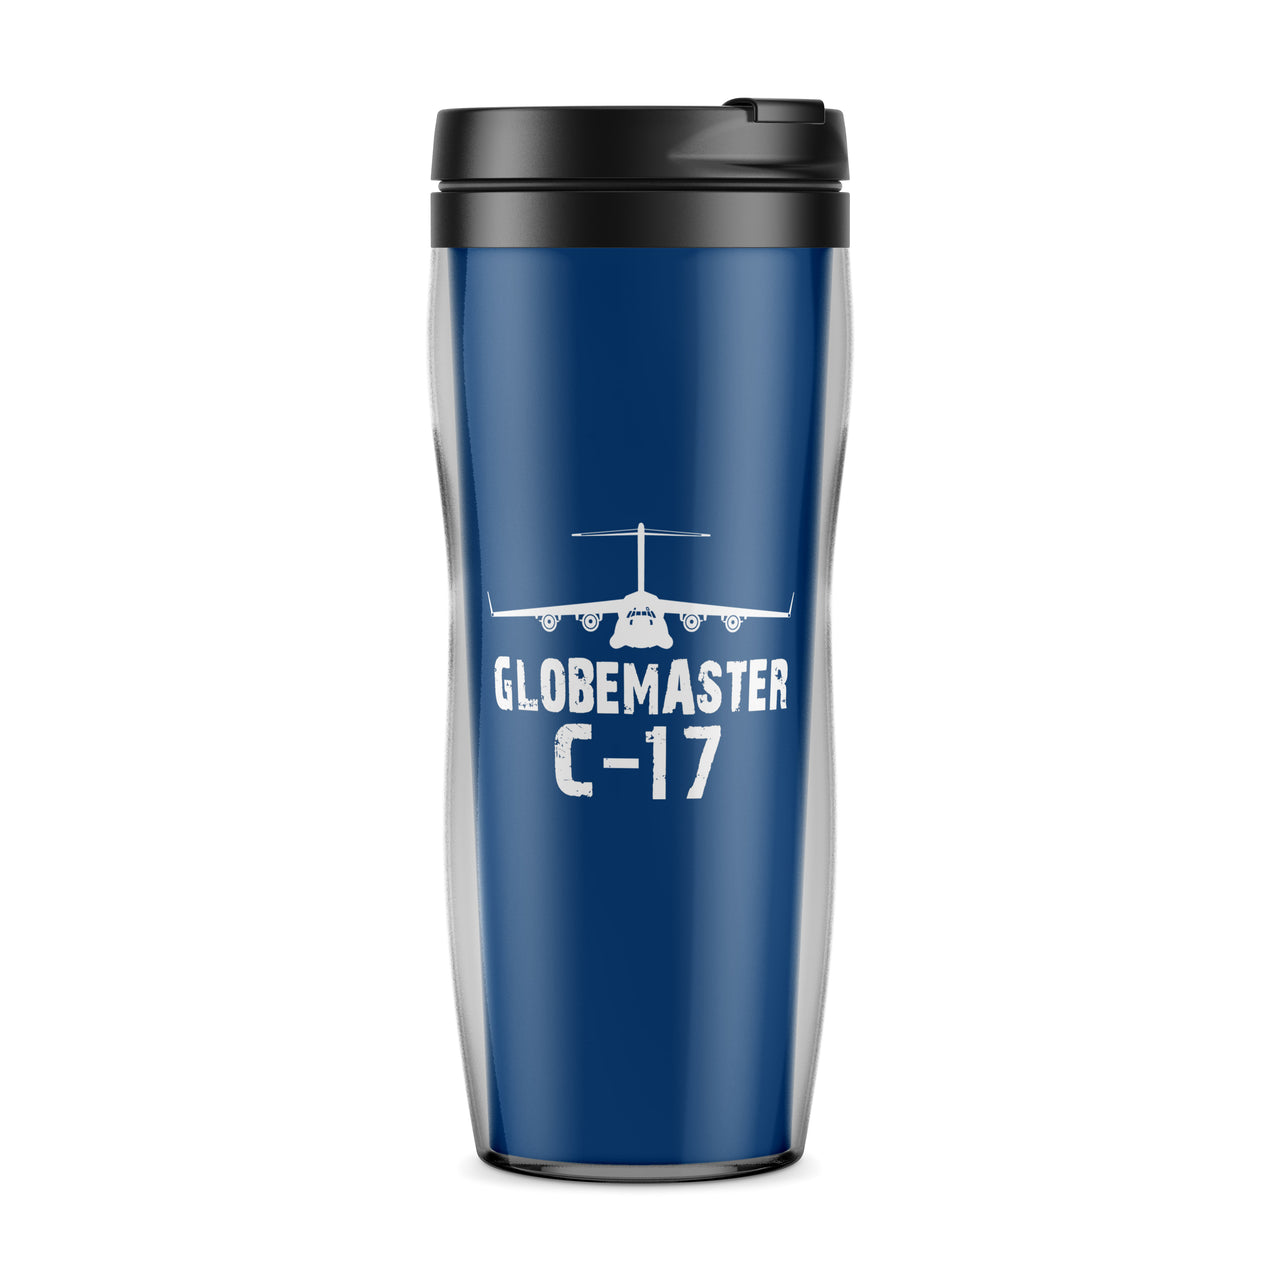 GlobeMaster C-17 & Plane Designed Travel Mugs